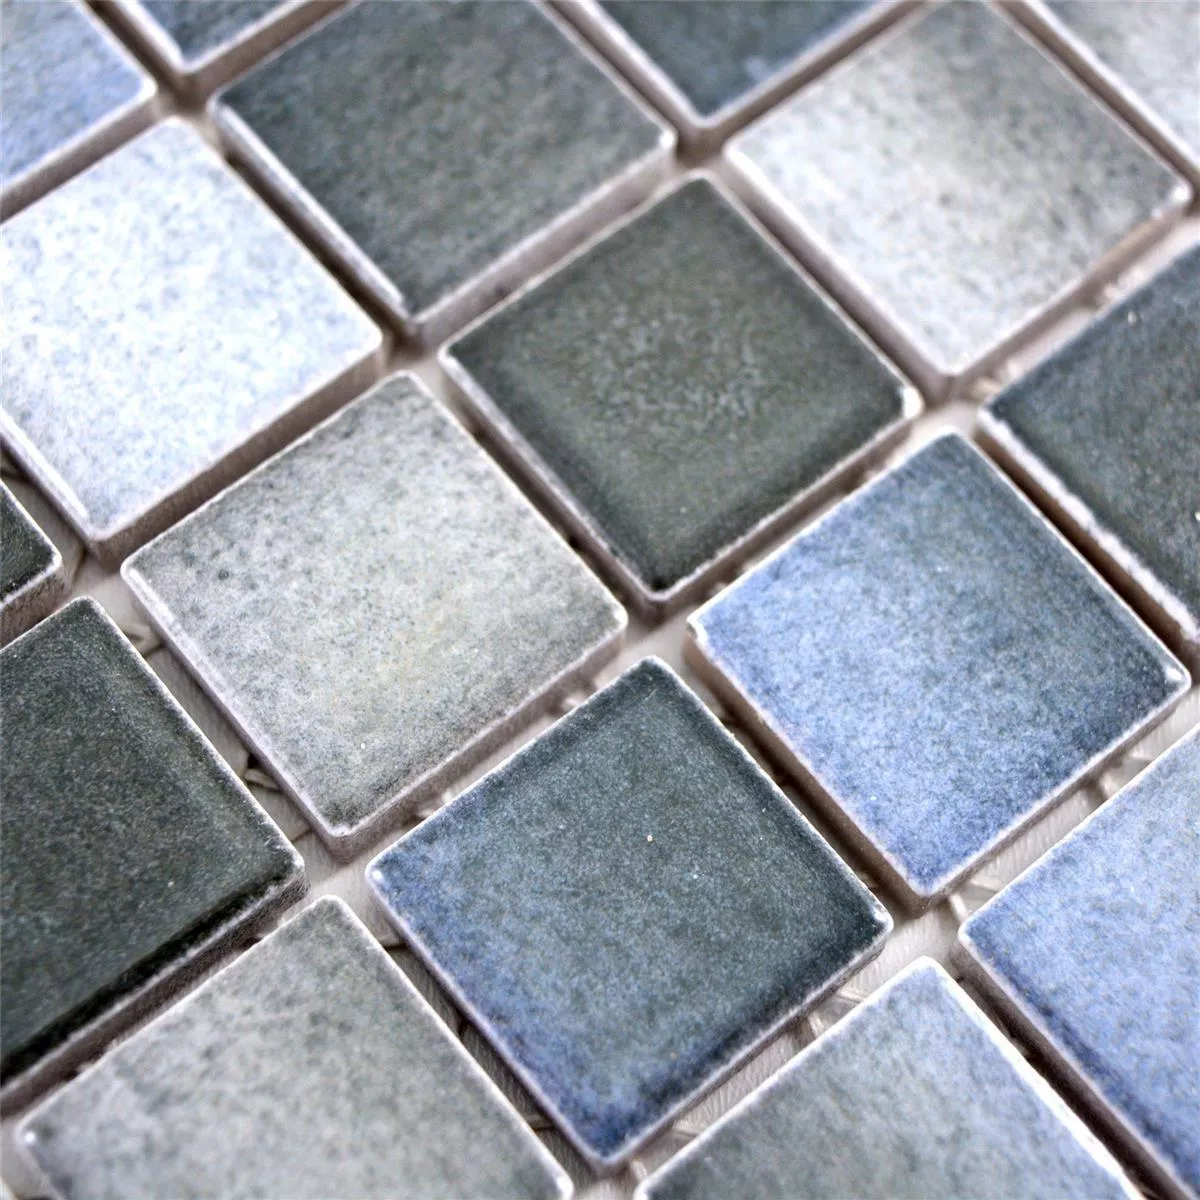 Sample Ceramic Mosaic Tiles Picasso Grey Blue